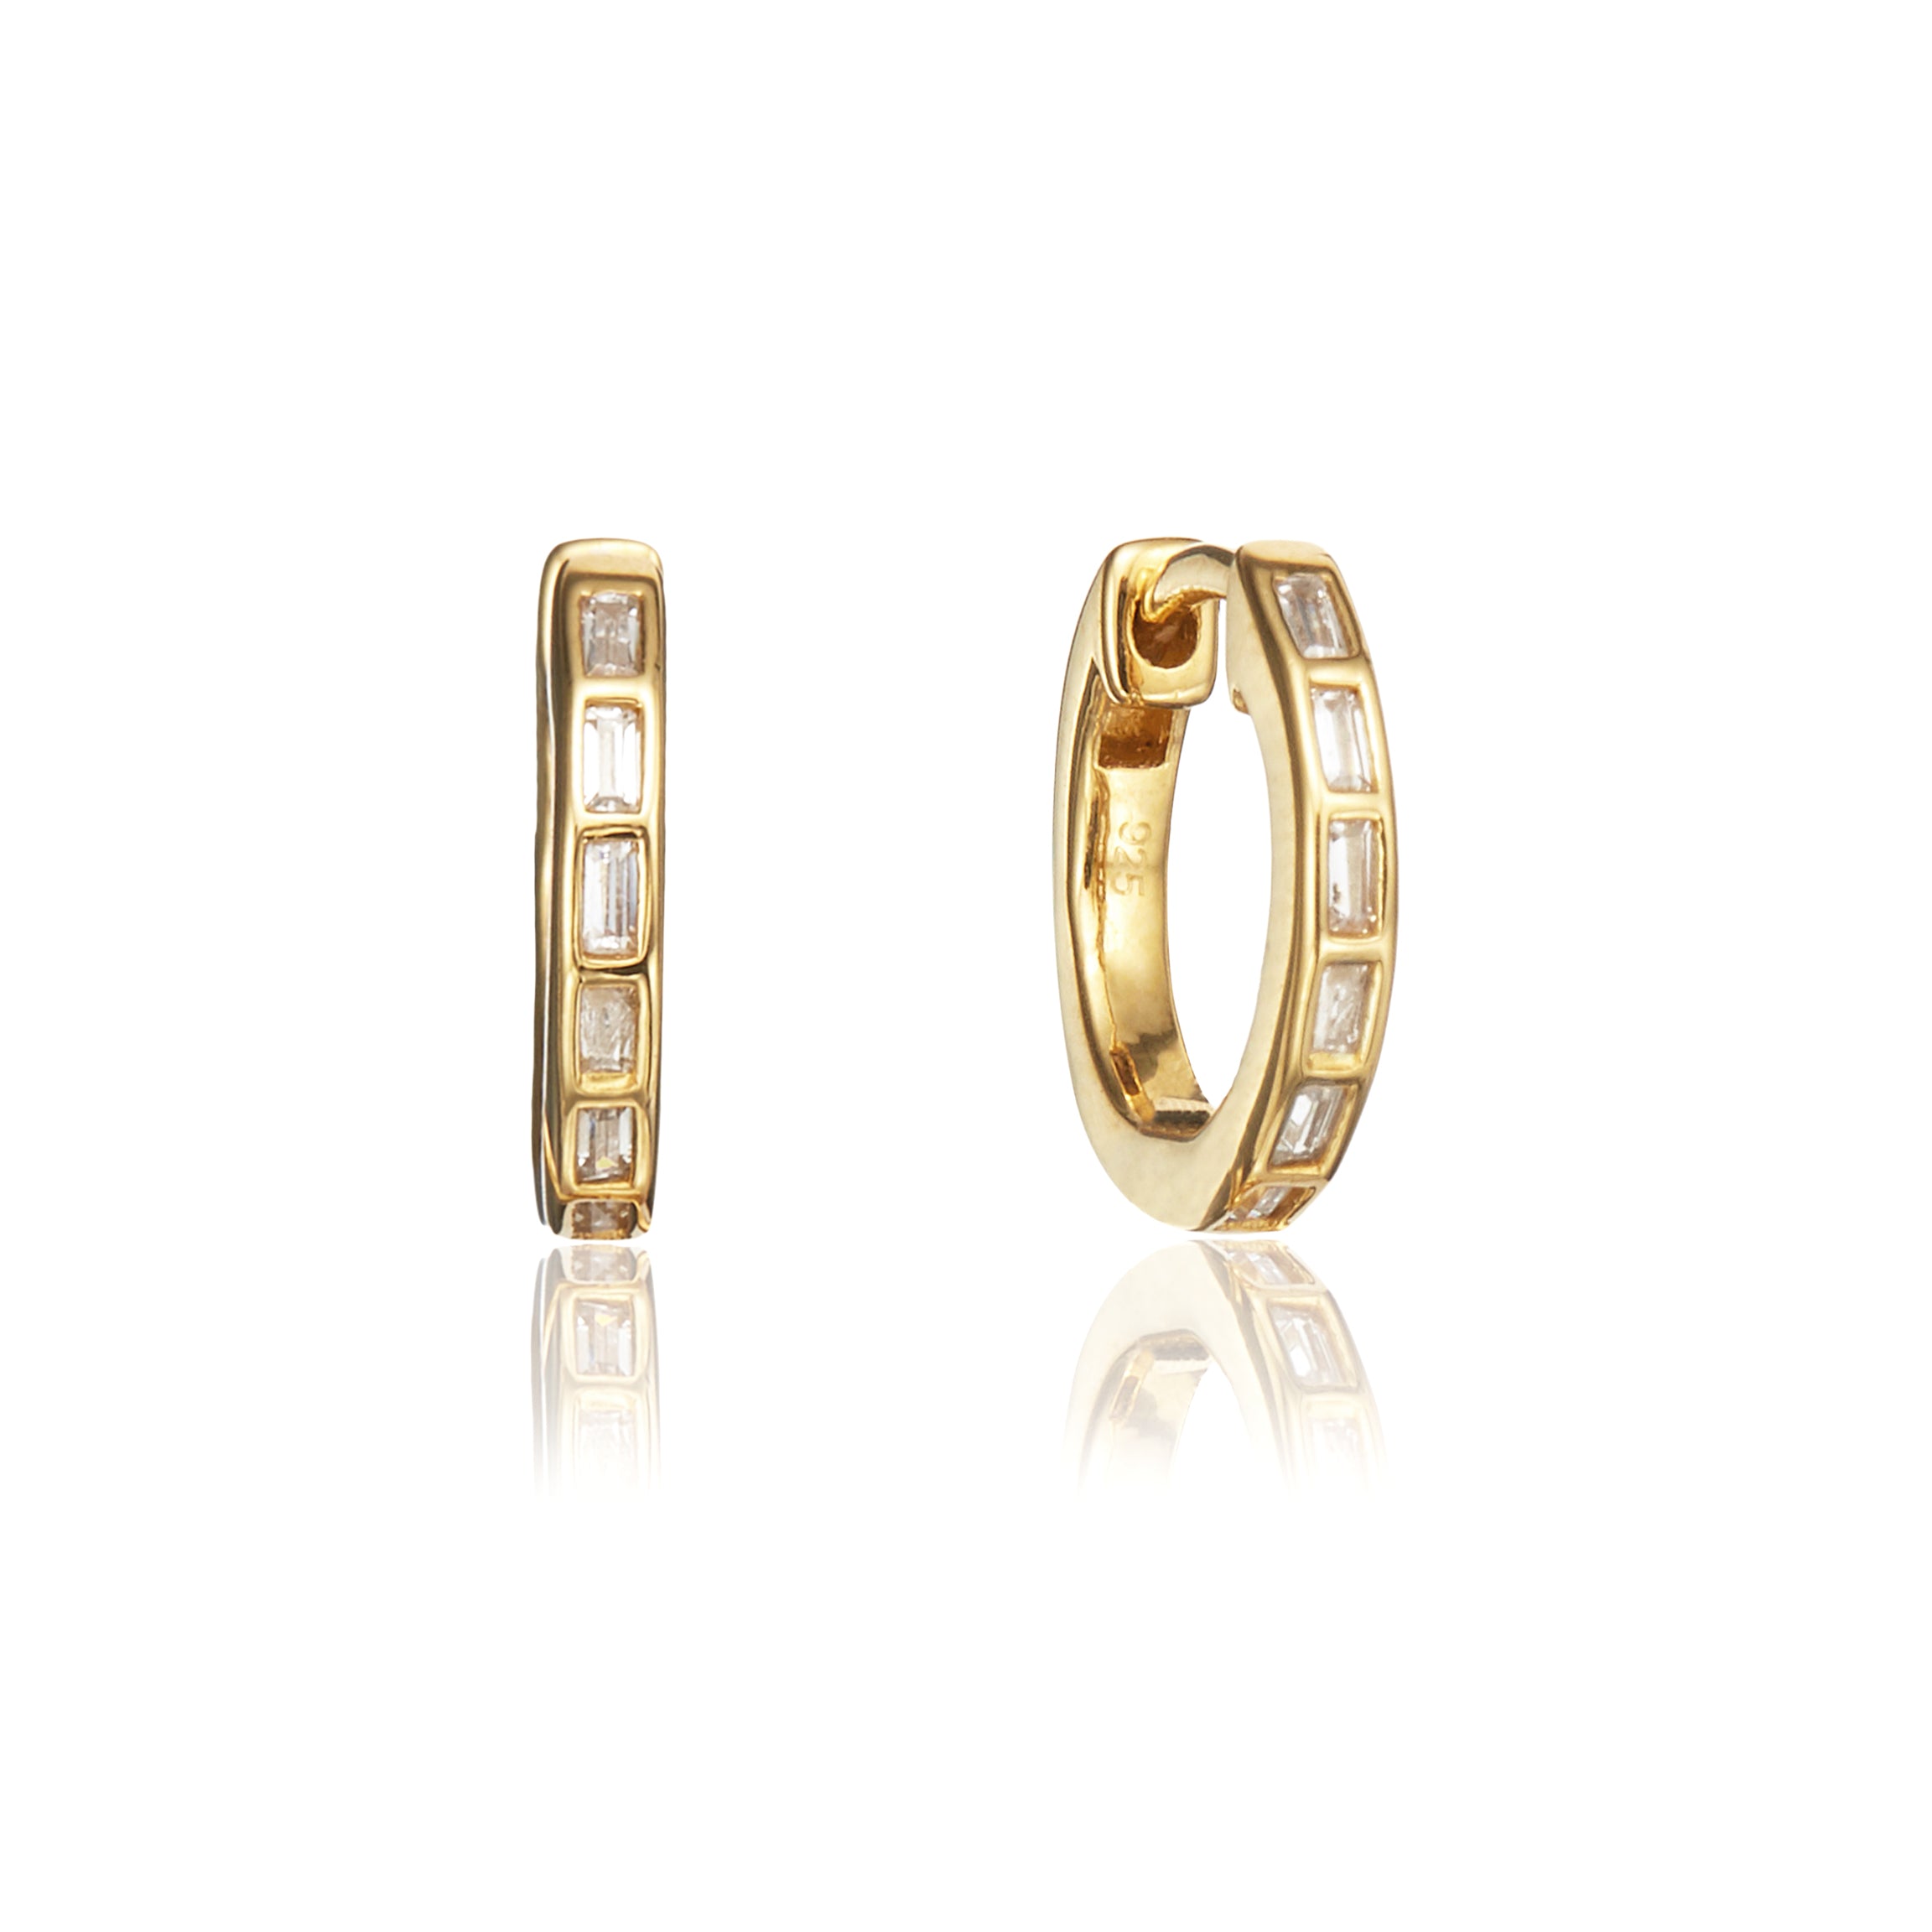 Gold diamond style baguette medium hoop earrings on a white background